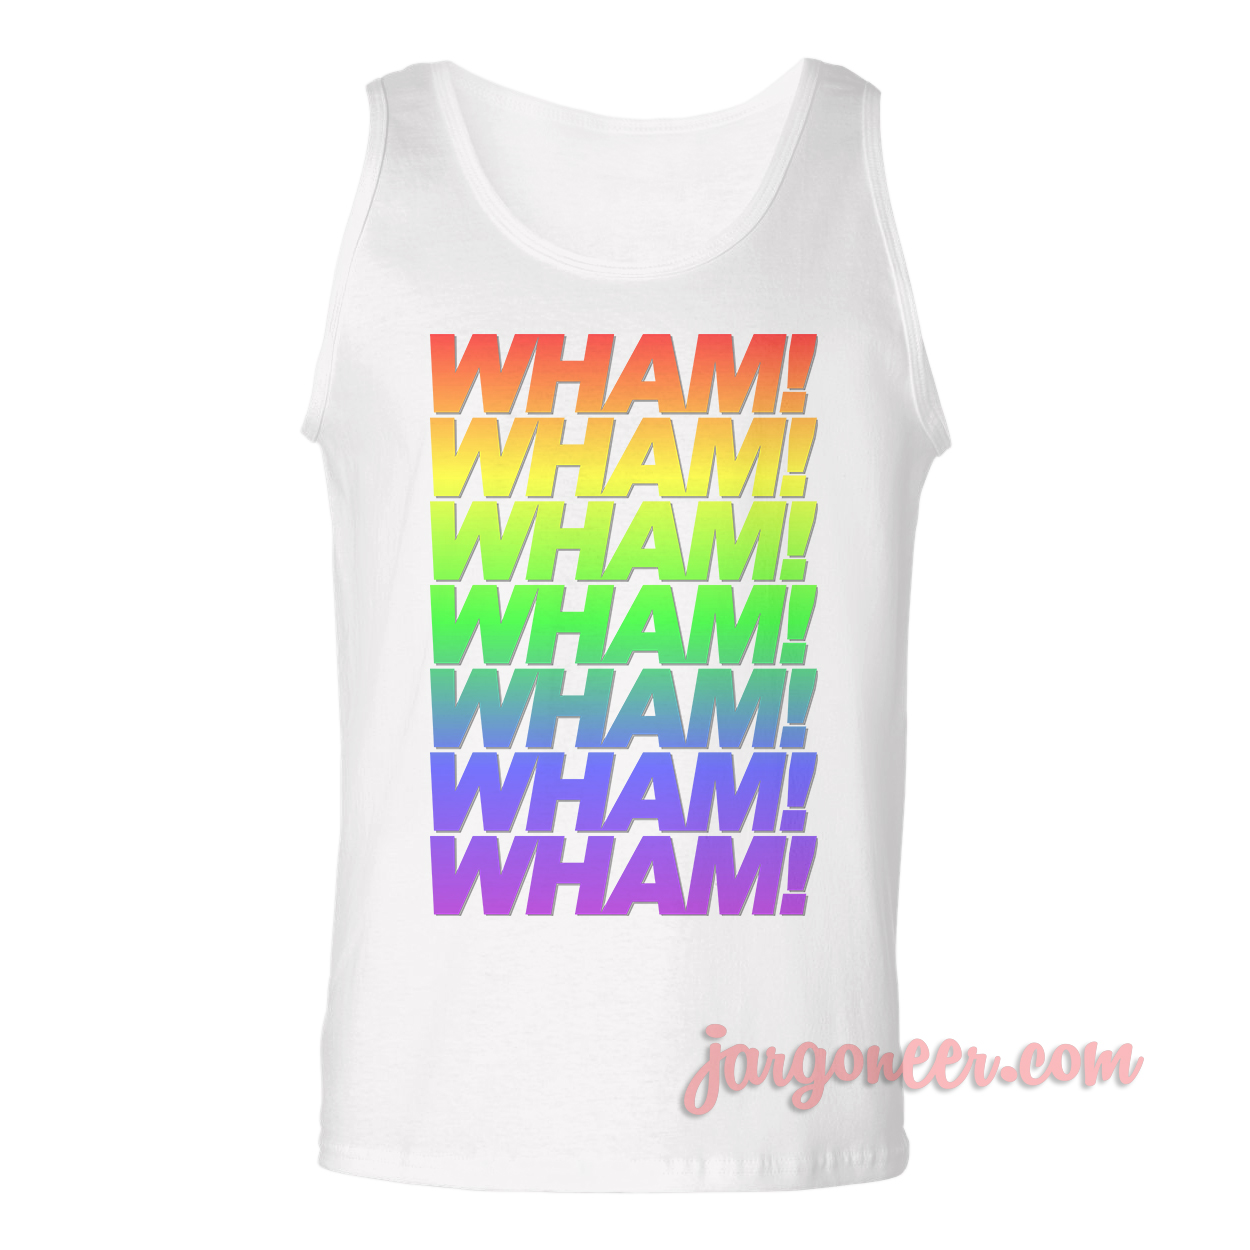 Wham Wham Rainbow White TTM - Shop Unique Graphic Cool Shirt Designs